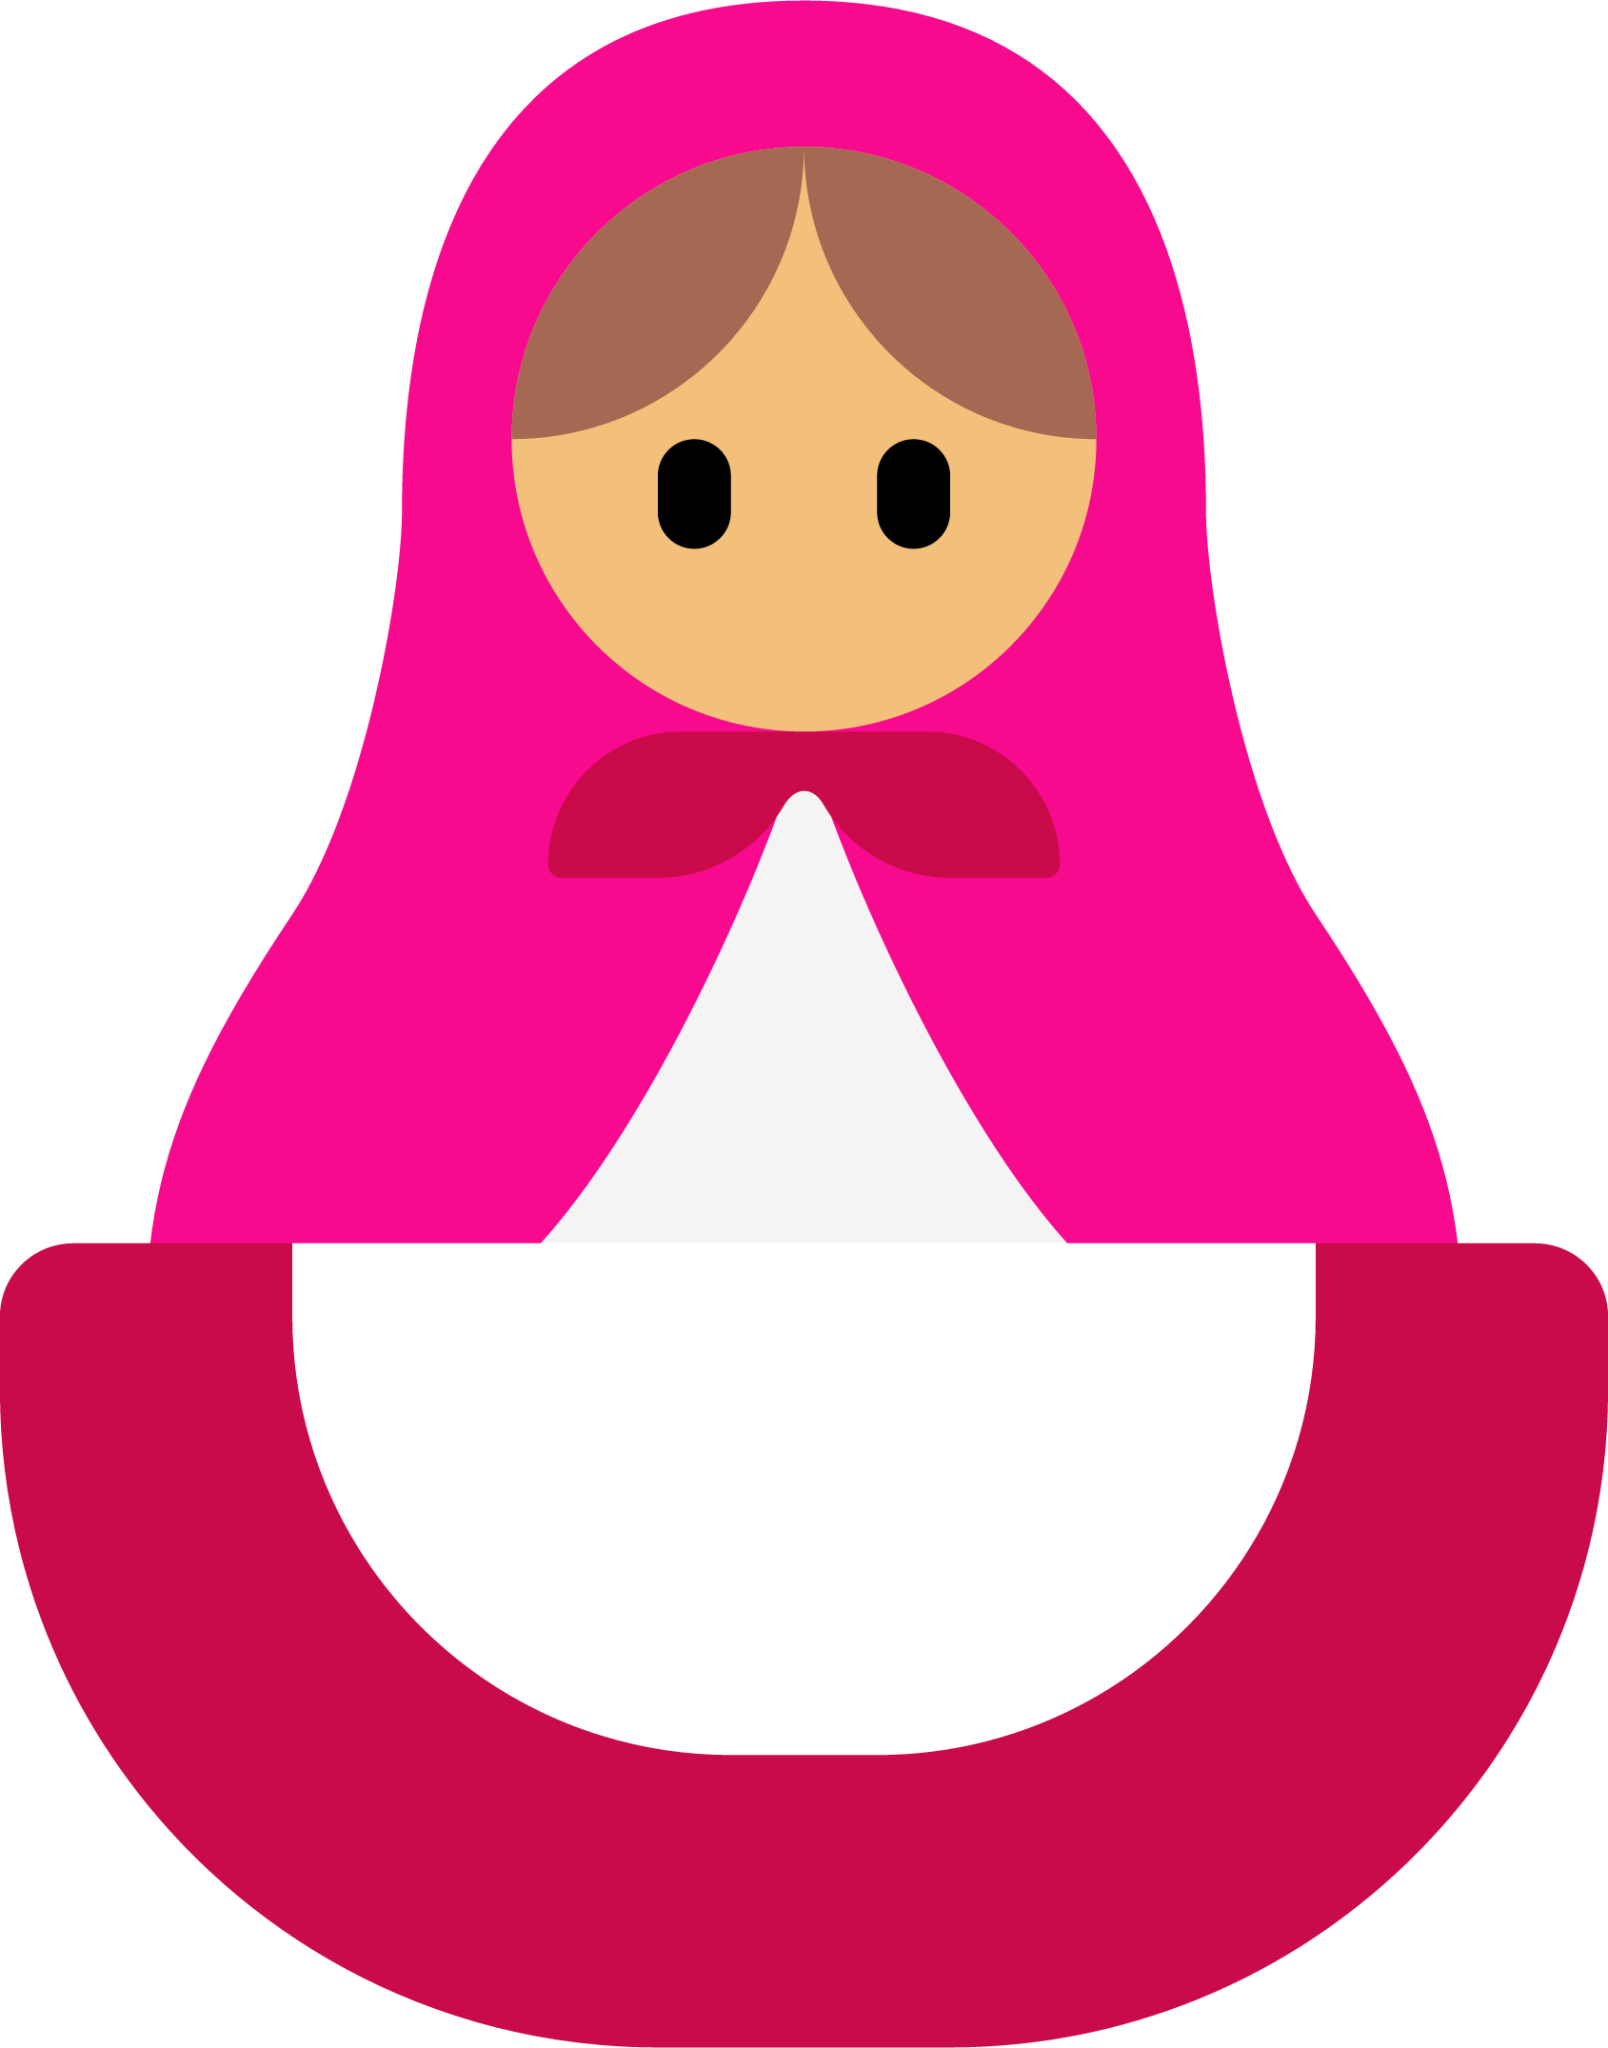 nesting dolls emoji